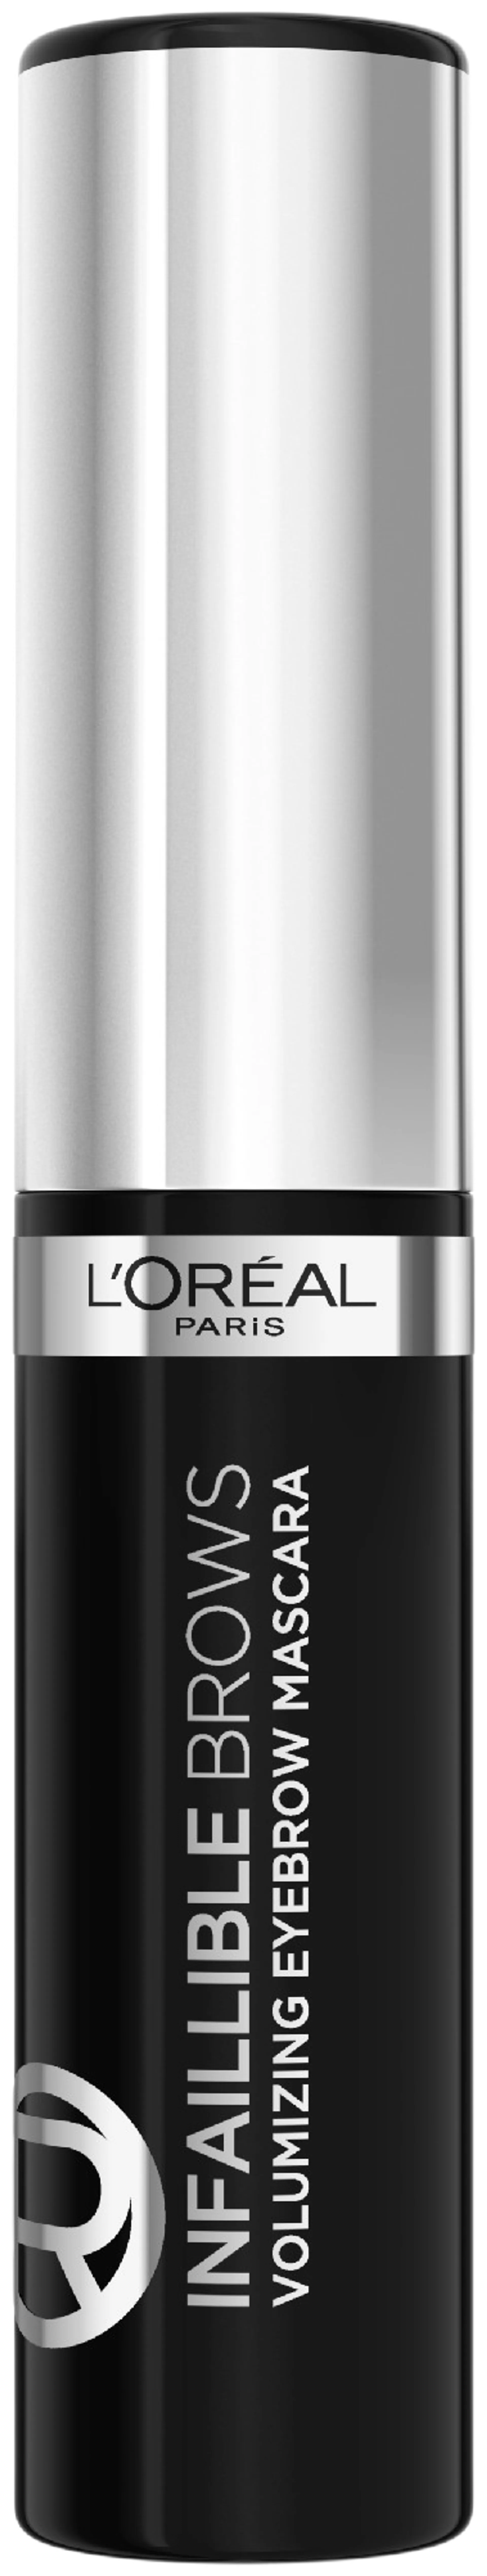 L'Oréal Paris Infaillible Brows 24H Volumizing Eyebrow Mascara Clear kulmamaskara 4,9ml - 2